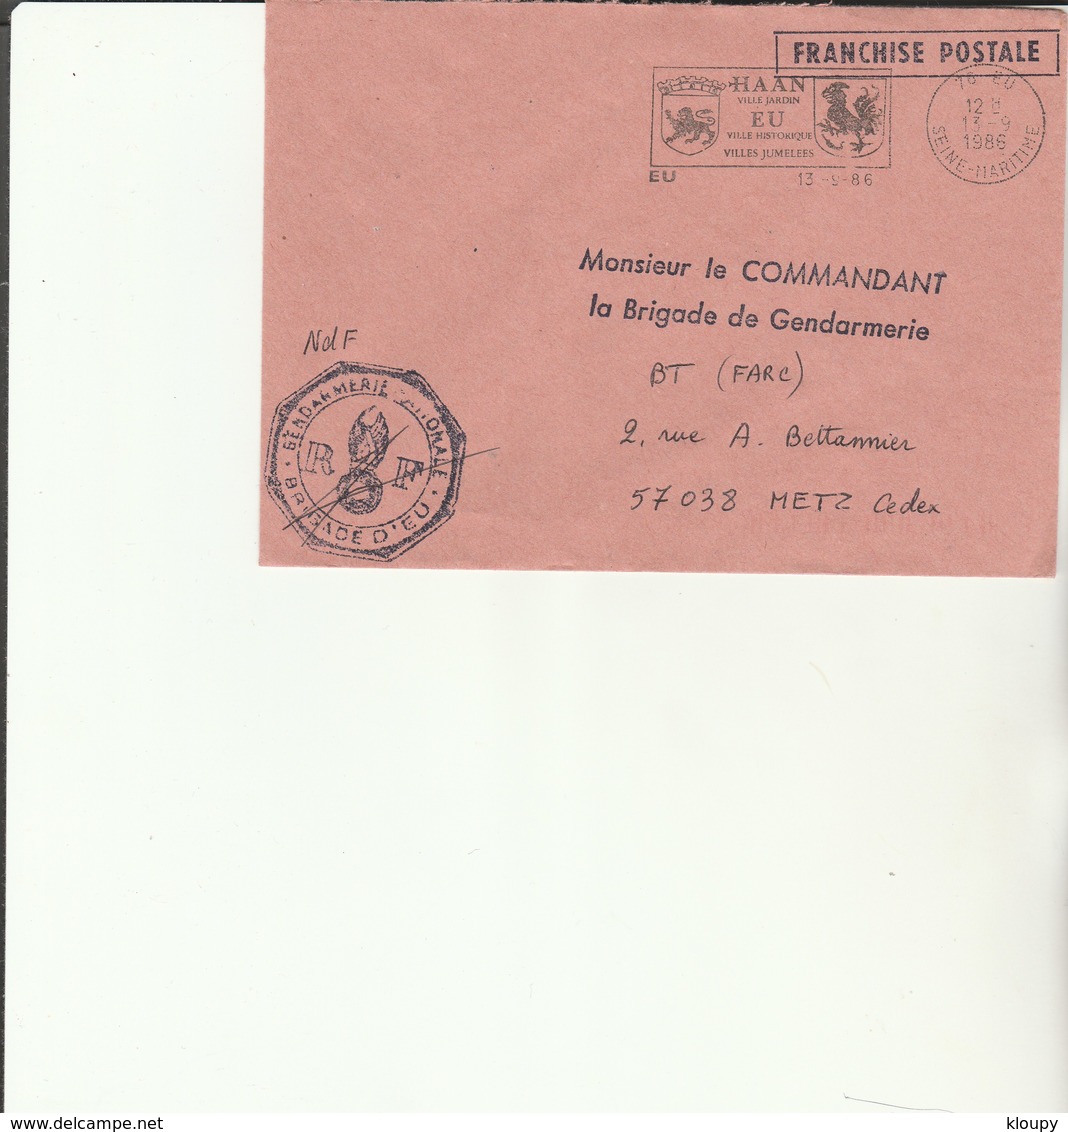 L1 -  Enveloppe Gendarmerie D ' EU   - Cachet Flamme EU - Coq - Lion - HAAN - Military Postmarks From 1900 (out Of Wars Periods)